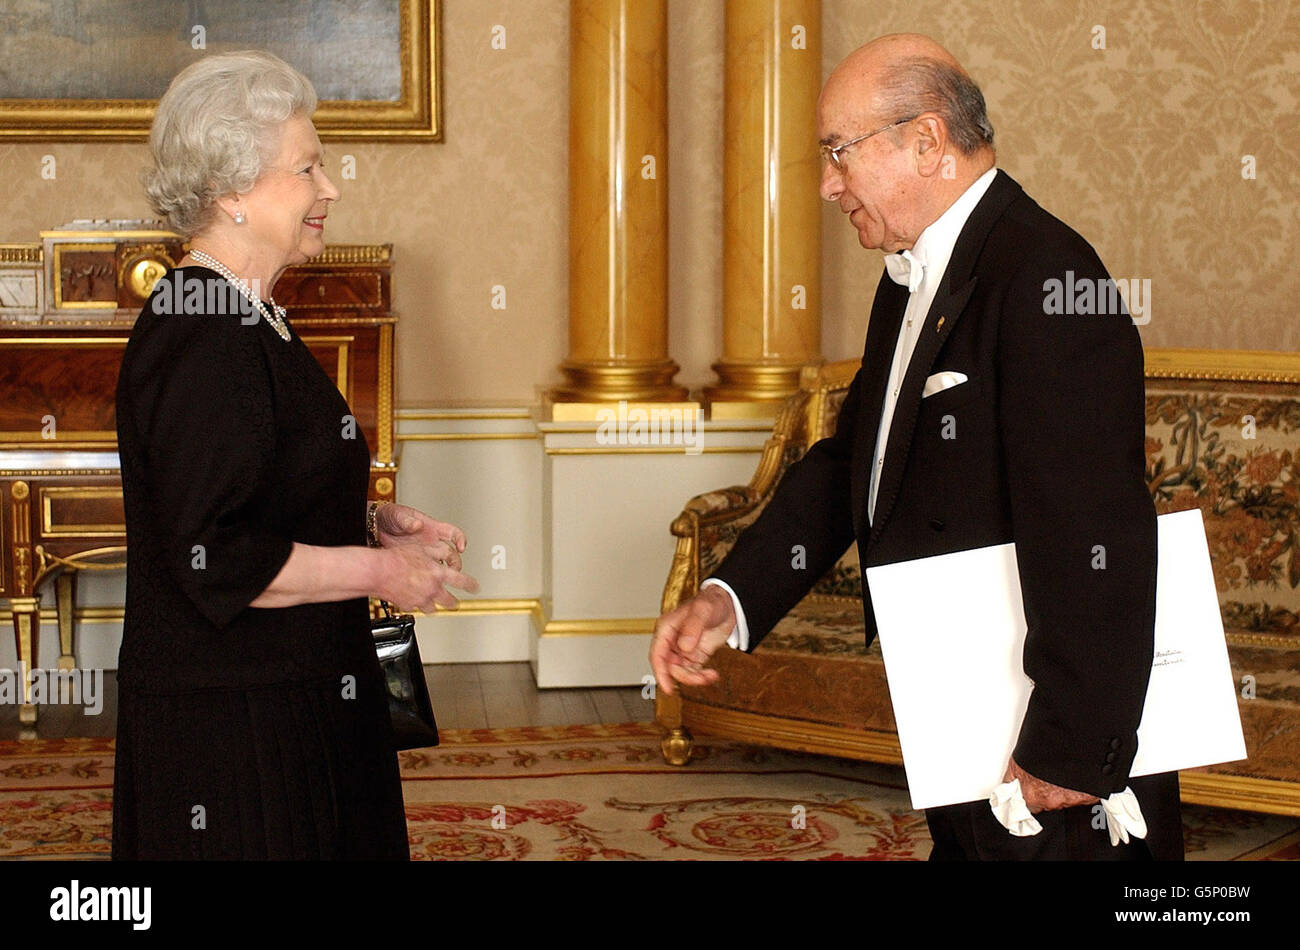 Queen Elizabeth II receives His Excellency the Ambassador of Bolivia, Senor Marcelo Perez-Monasterios at Buckingham Palace in London. Stock Photo